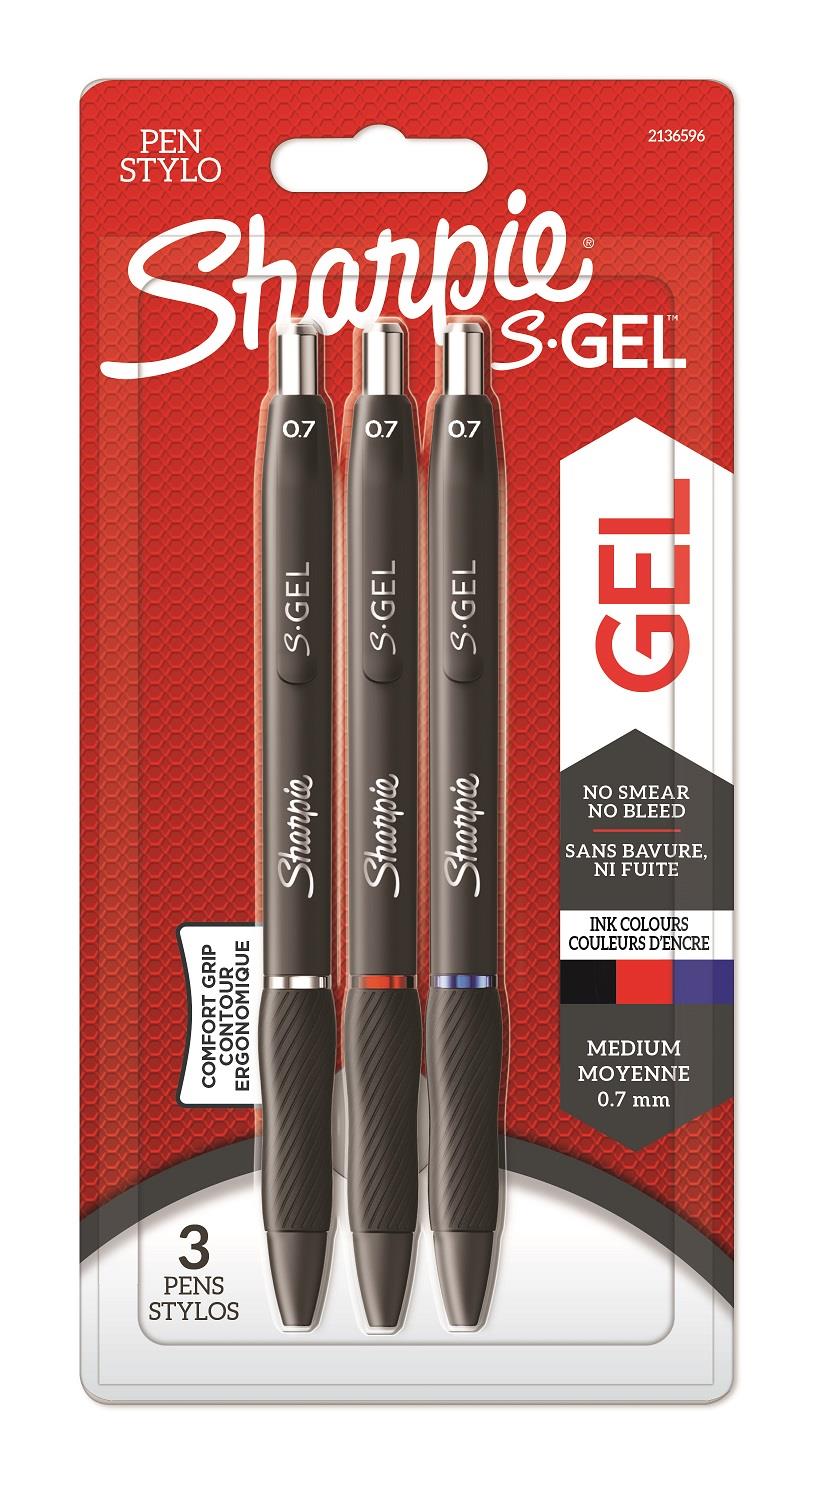 Gelové pero Sharpie S-GEL 3ks - (černé, modré, červené)